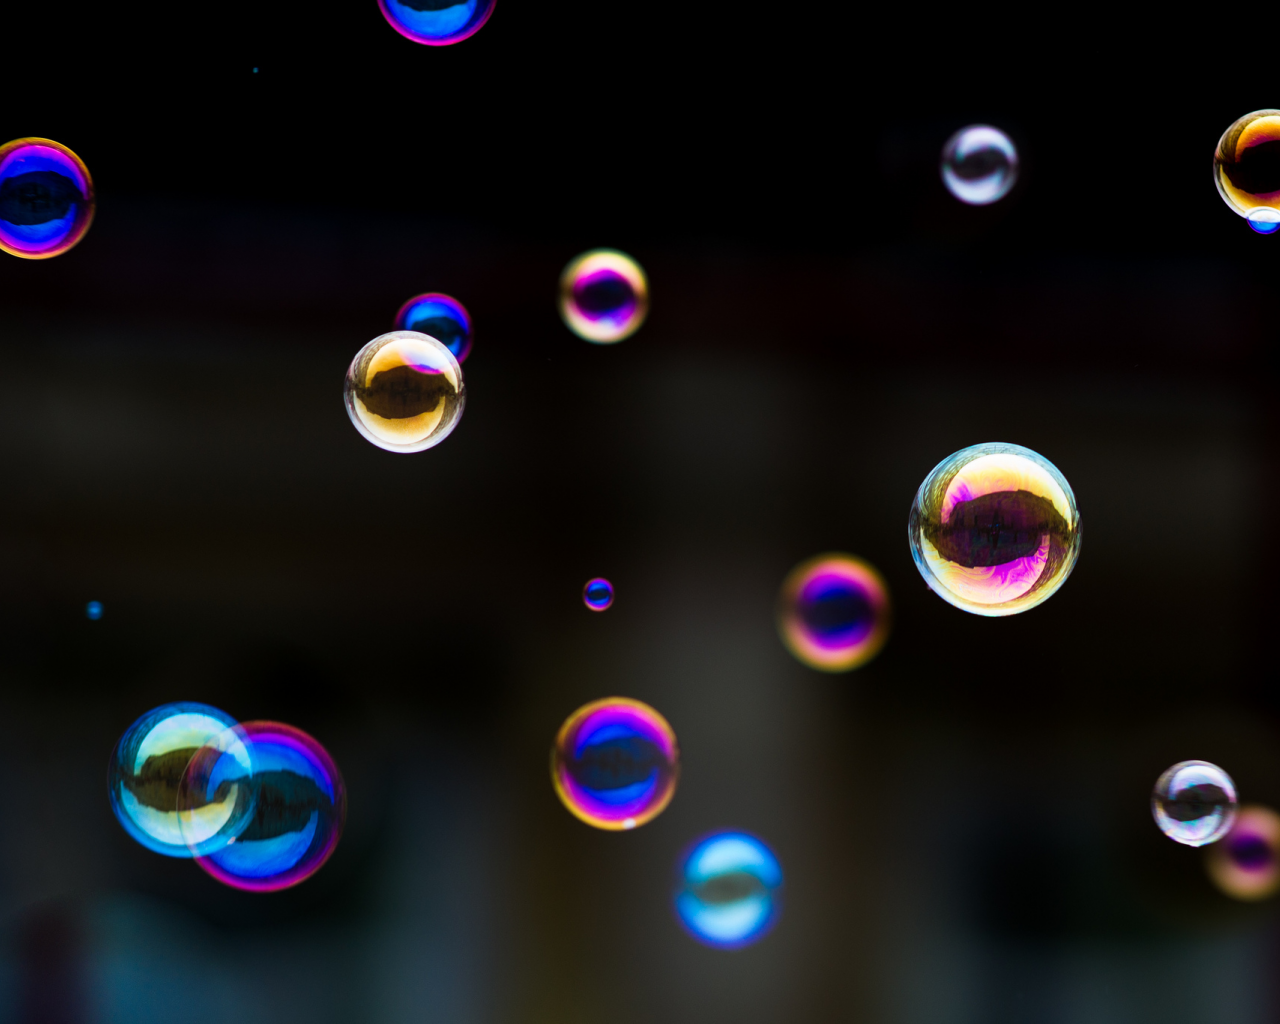 цвета, пузыри